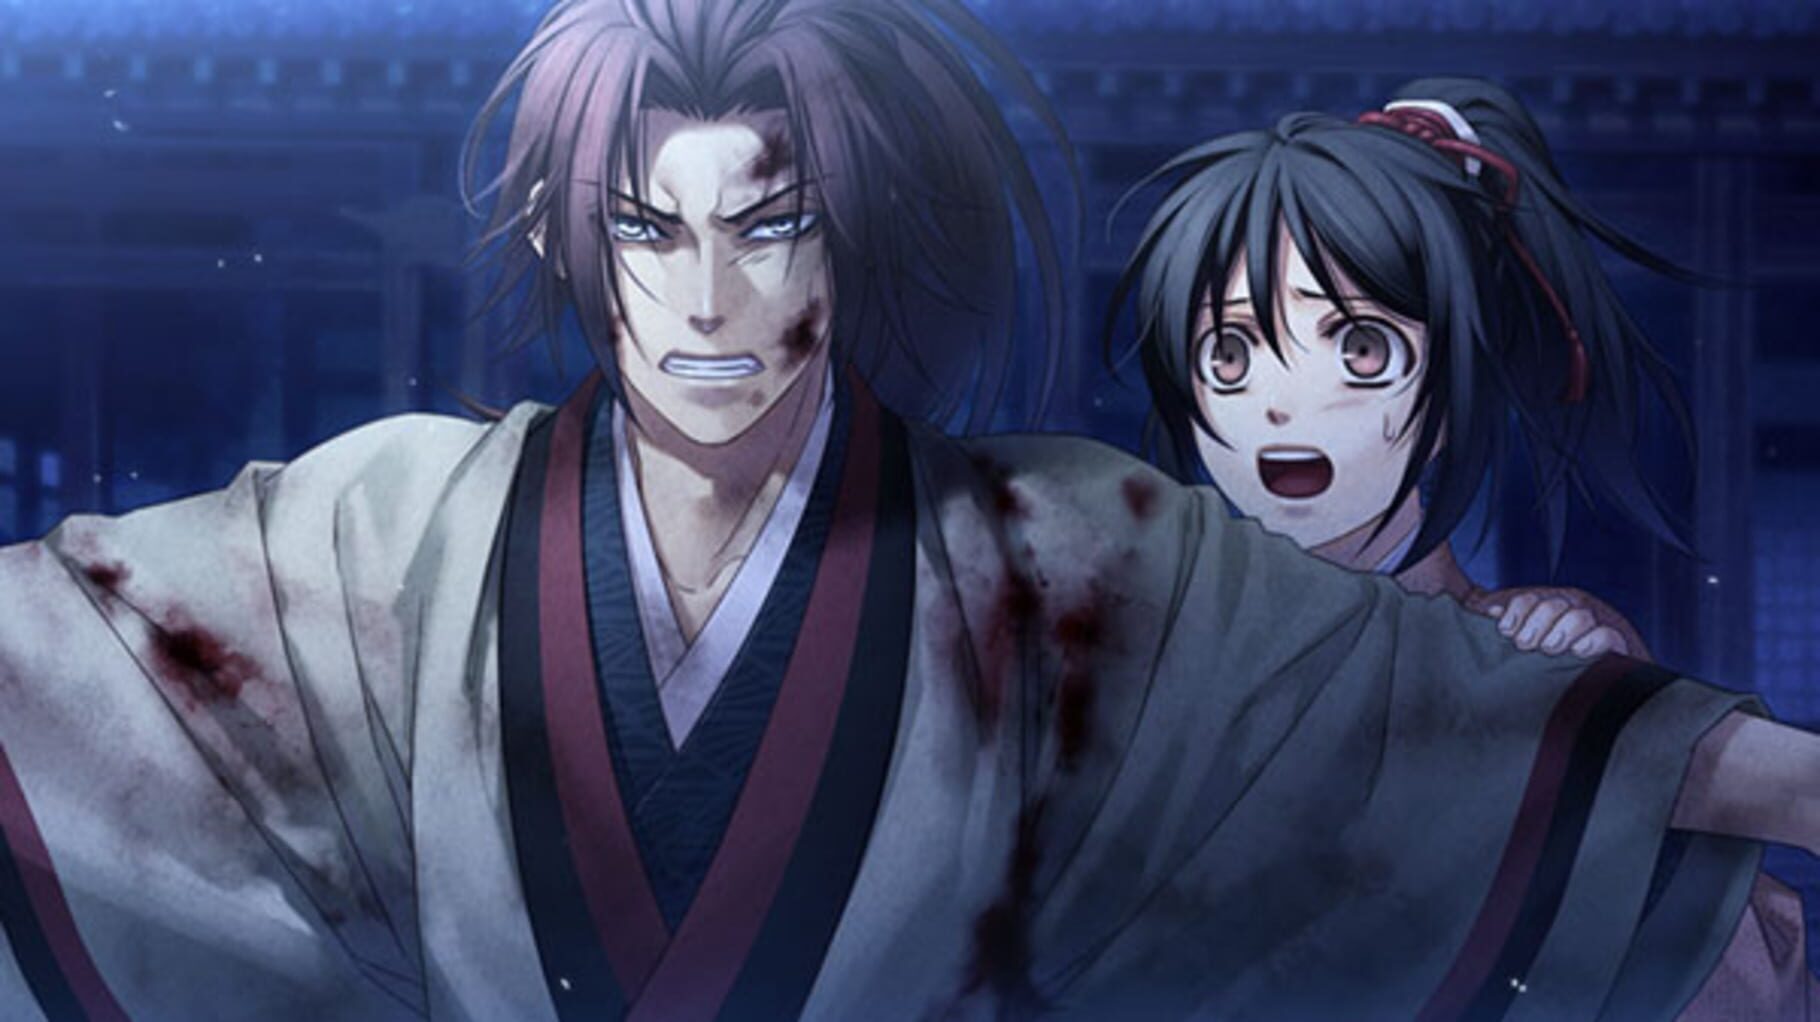 Hakuoki: Chronicles of Wind and Blossom screenshot